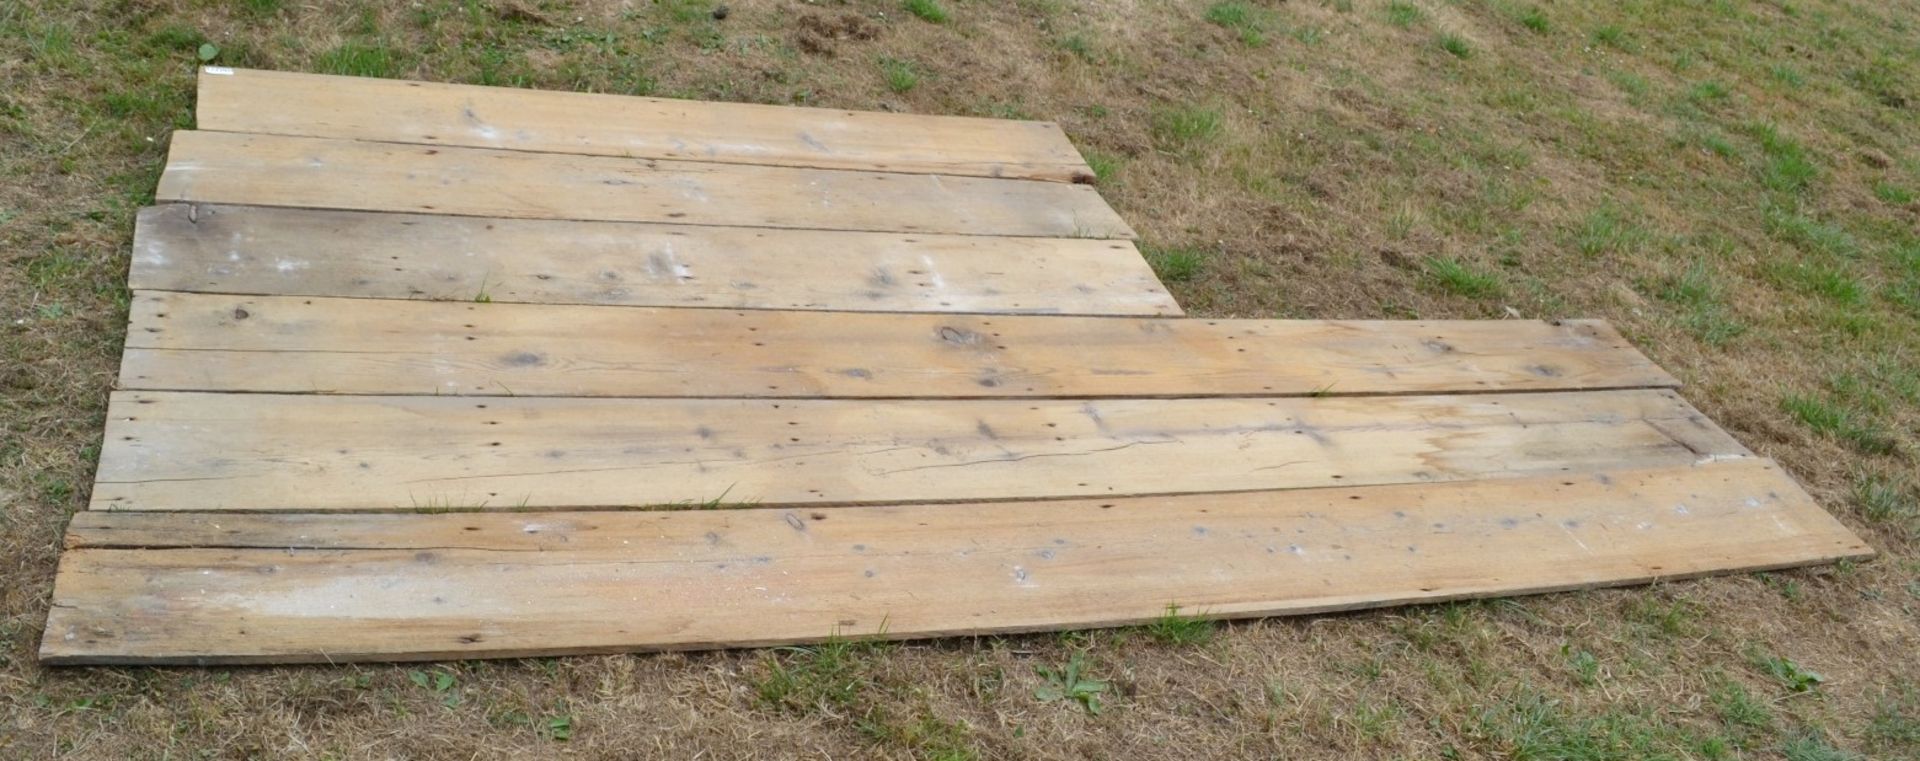 6 x Reclaimed Pine Panel Floorboards - Ref: HM271 - Image 2 of 4